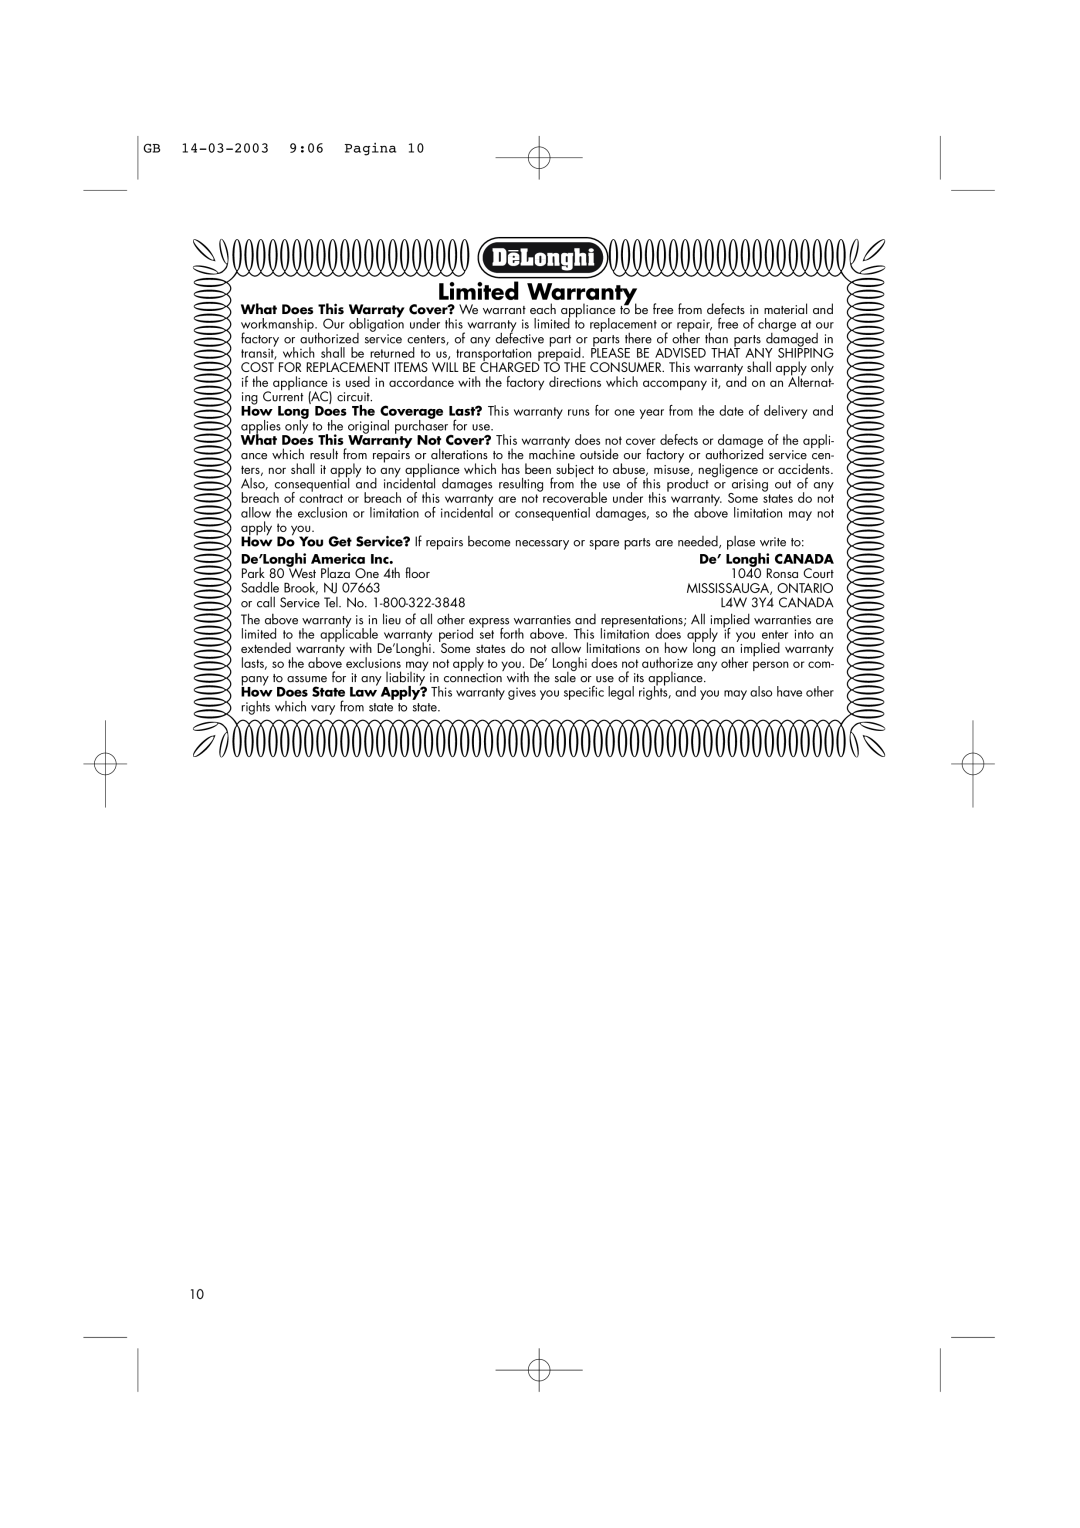 DeLonghi Toaster-Oven-Broiler manual Limited Warranty, GB 14-03-20039 06 Pagina, De’Longhi America Inc, De’ Longhi CANADA 